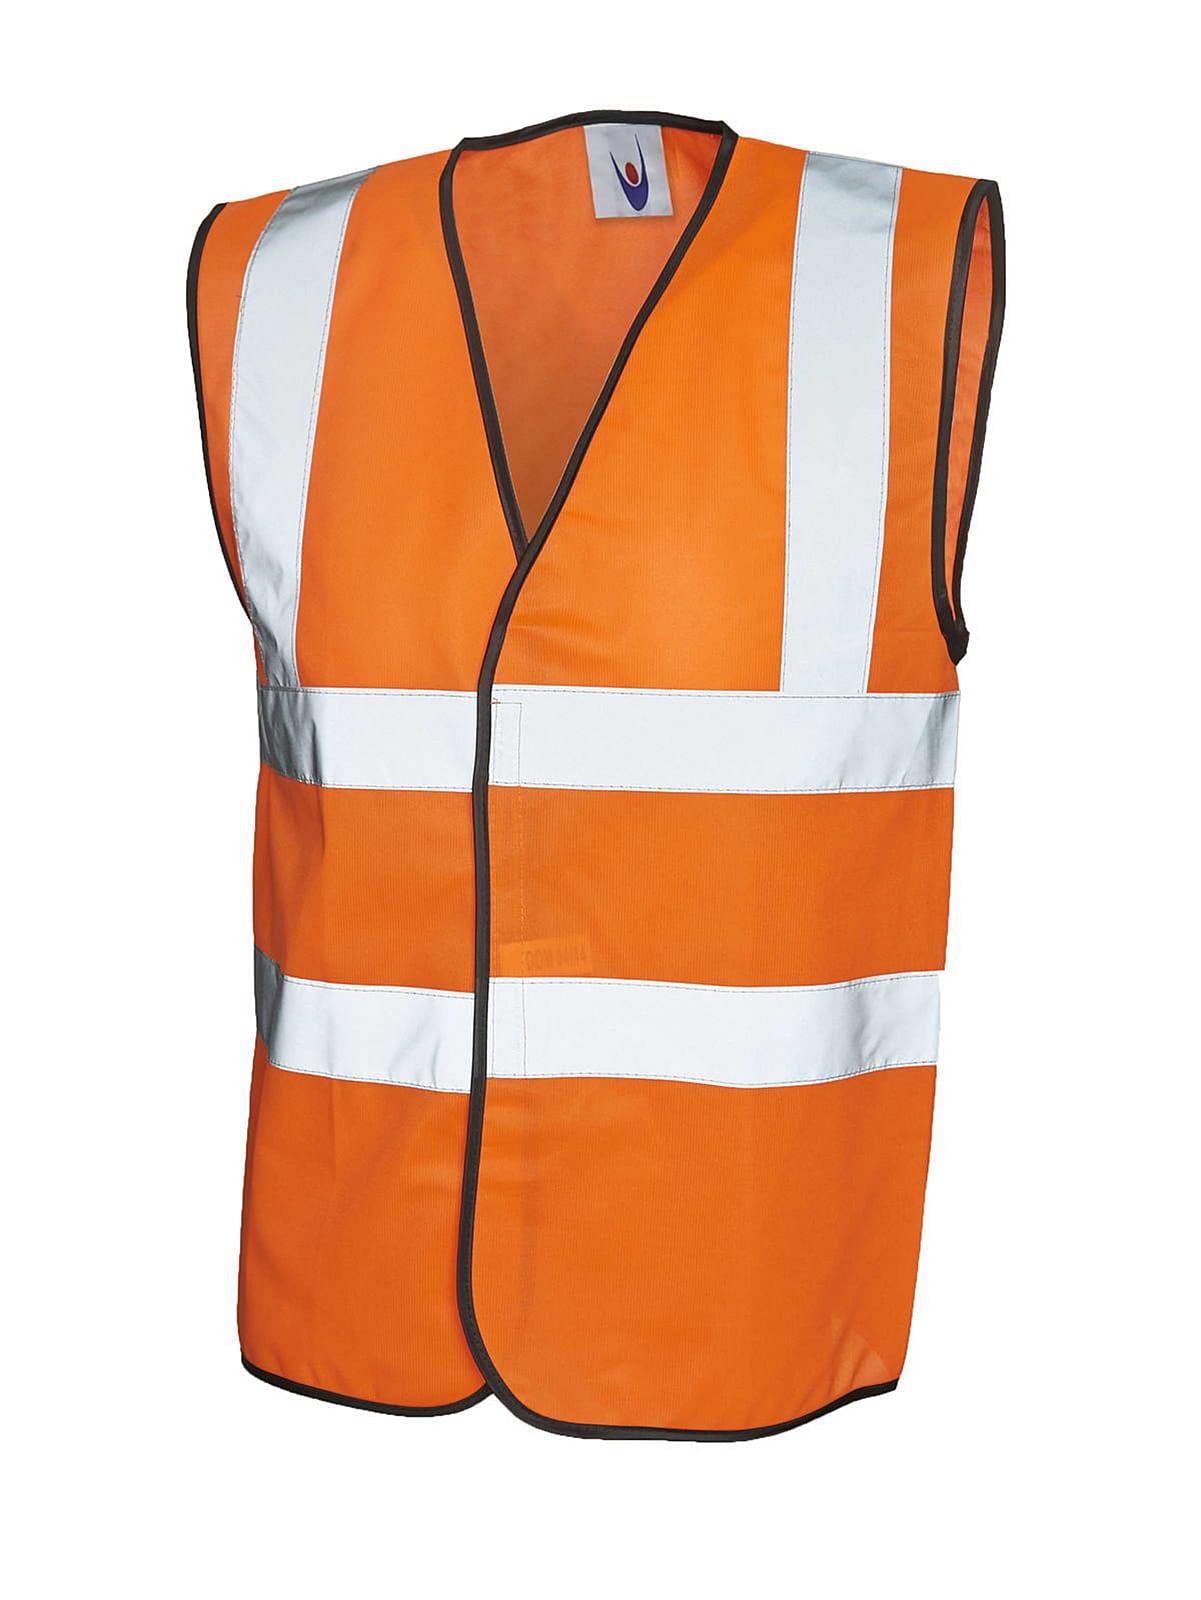 Uneek Sleeveless Safety Waist Coat in Orange (Product Code: UC801)